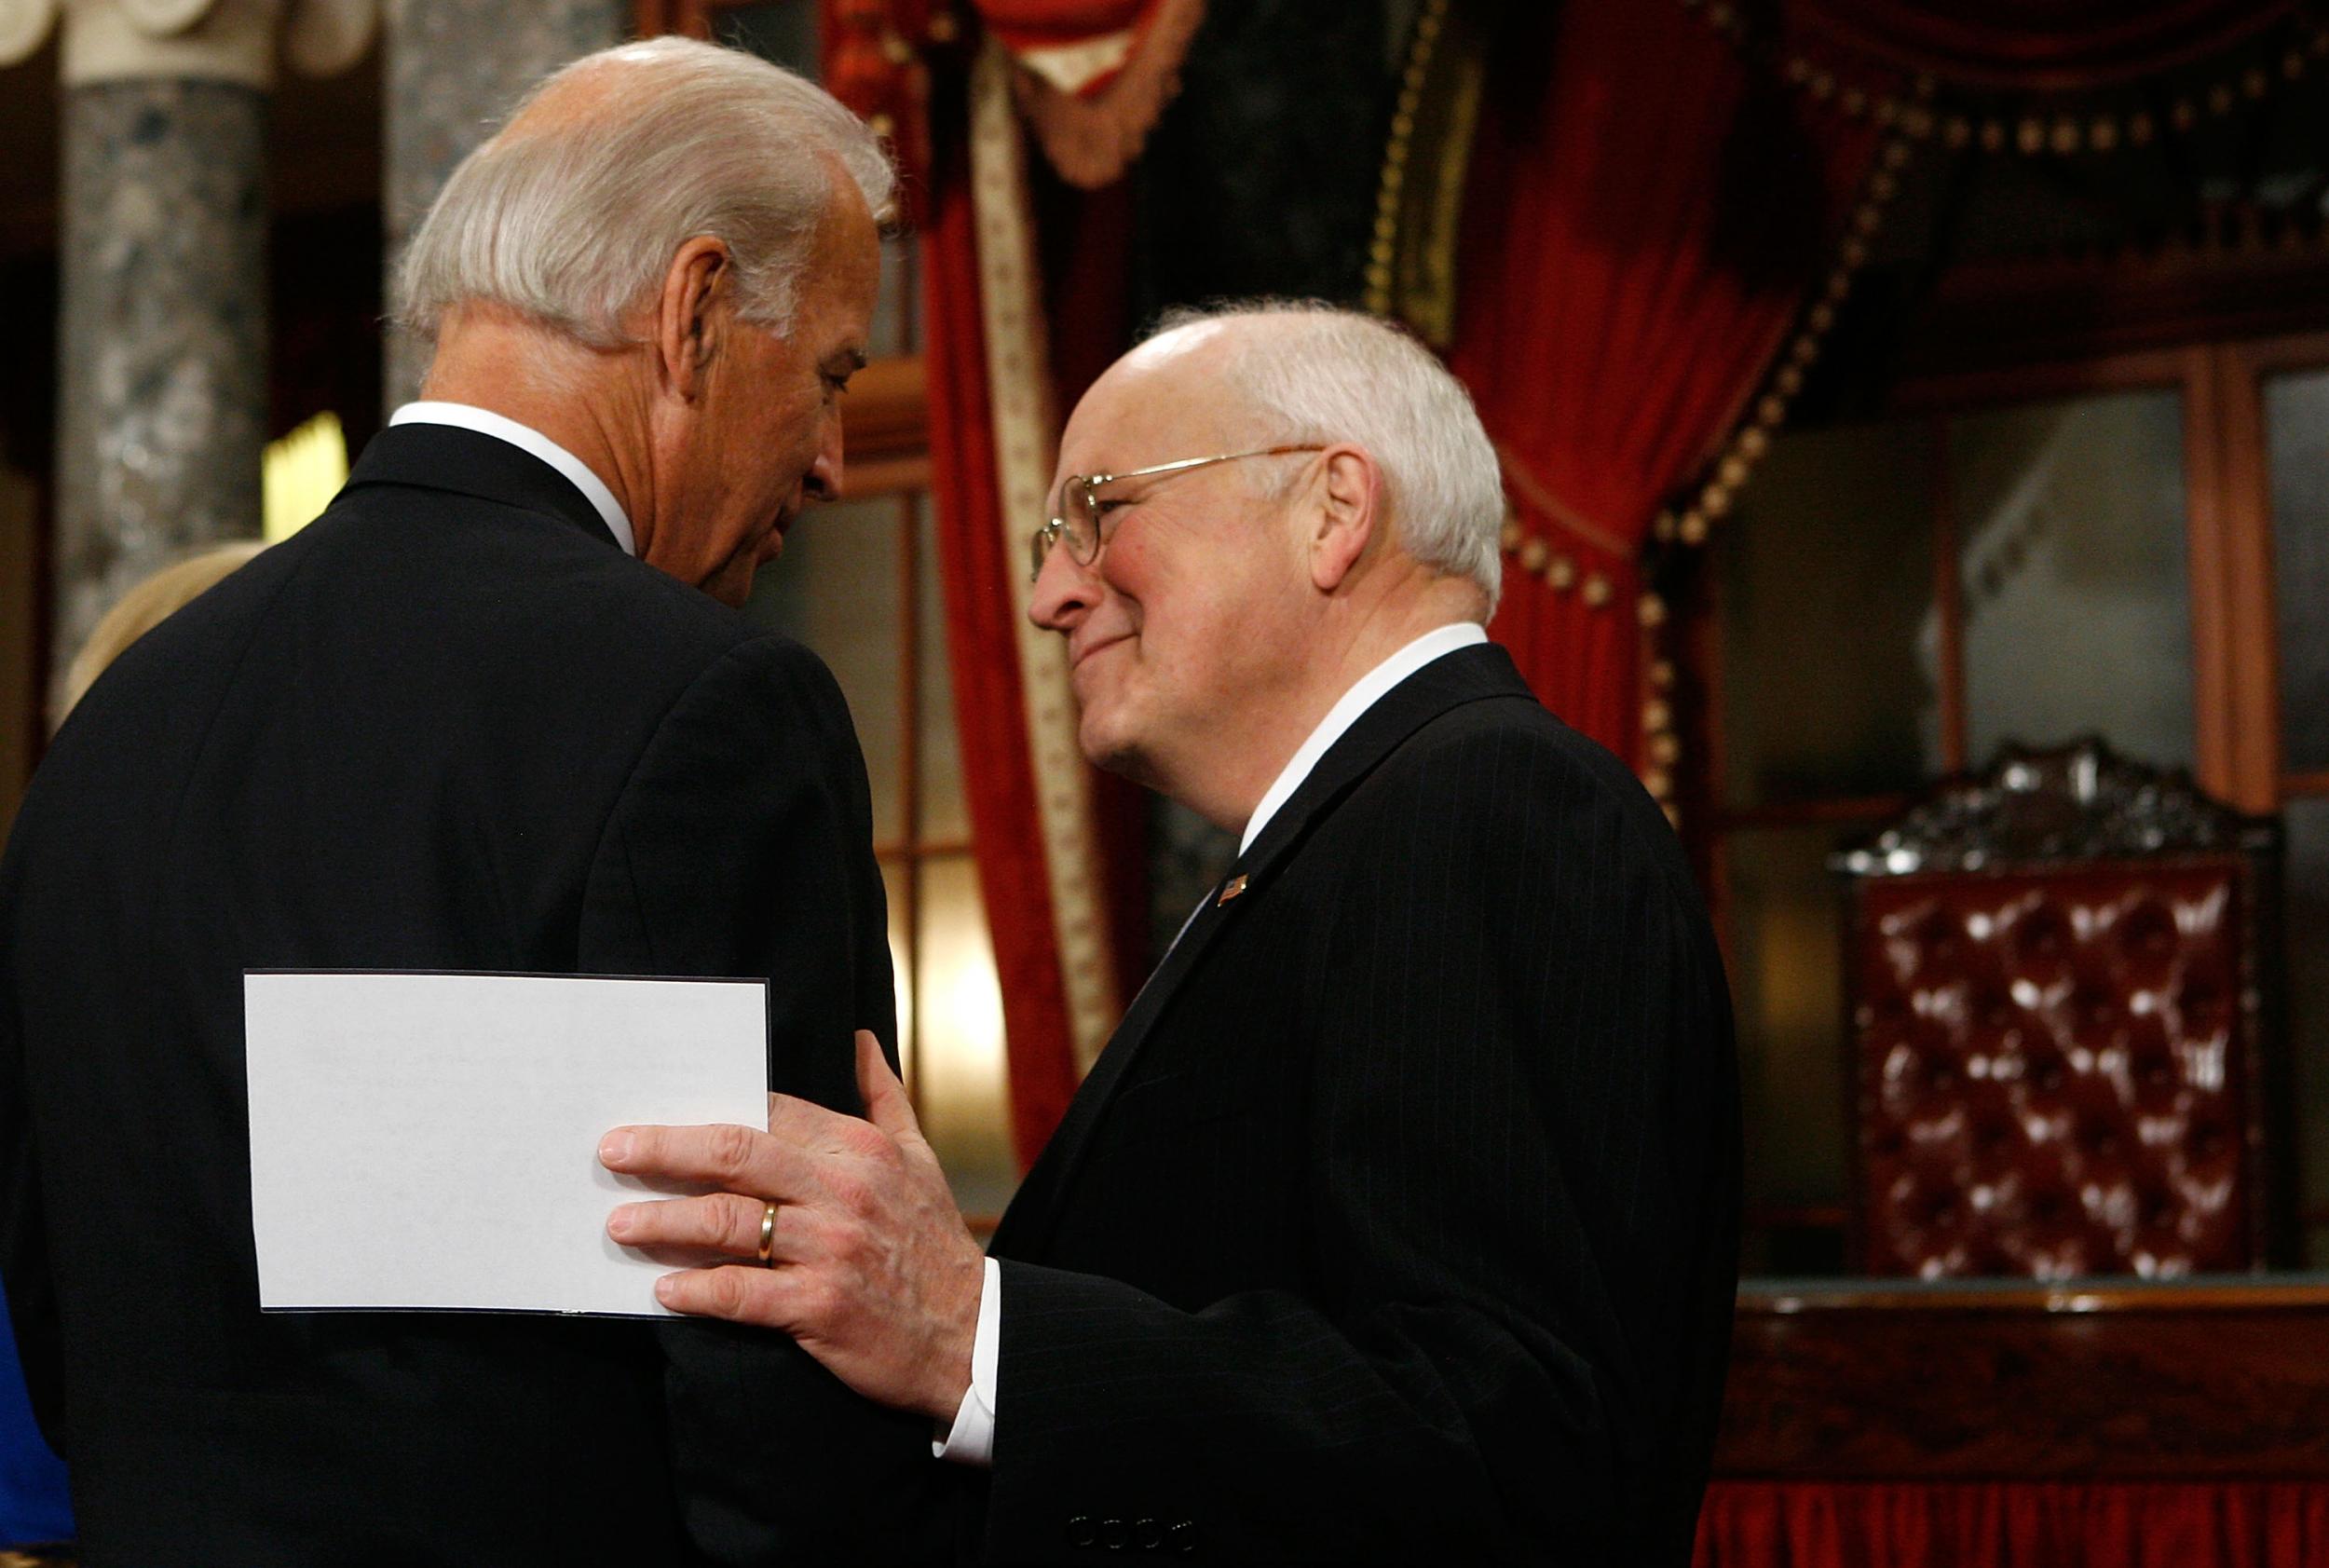 Joe Biden faces backlash over resurfaced video of him praising Dick Cheney: 'He is a decent man'